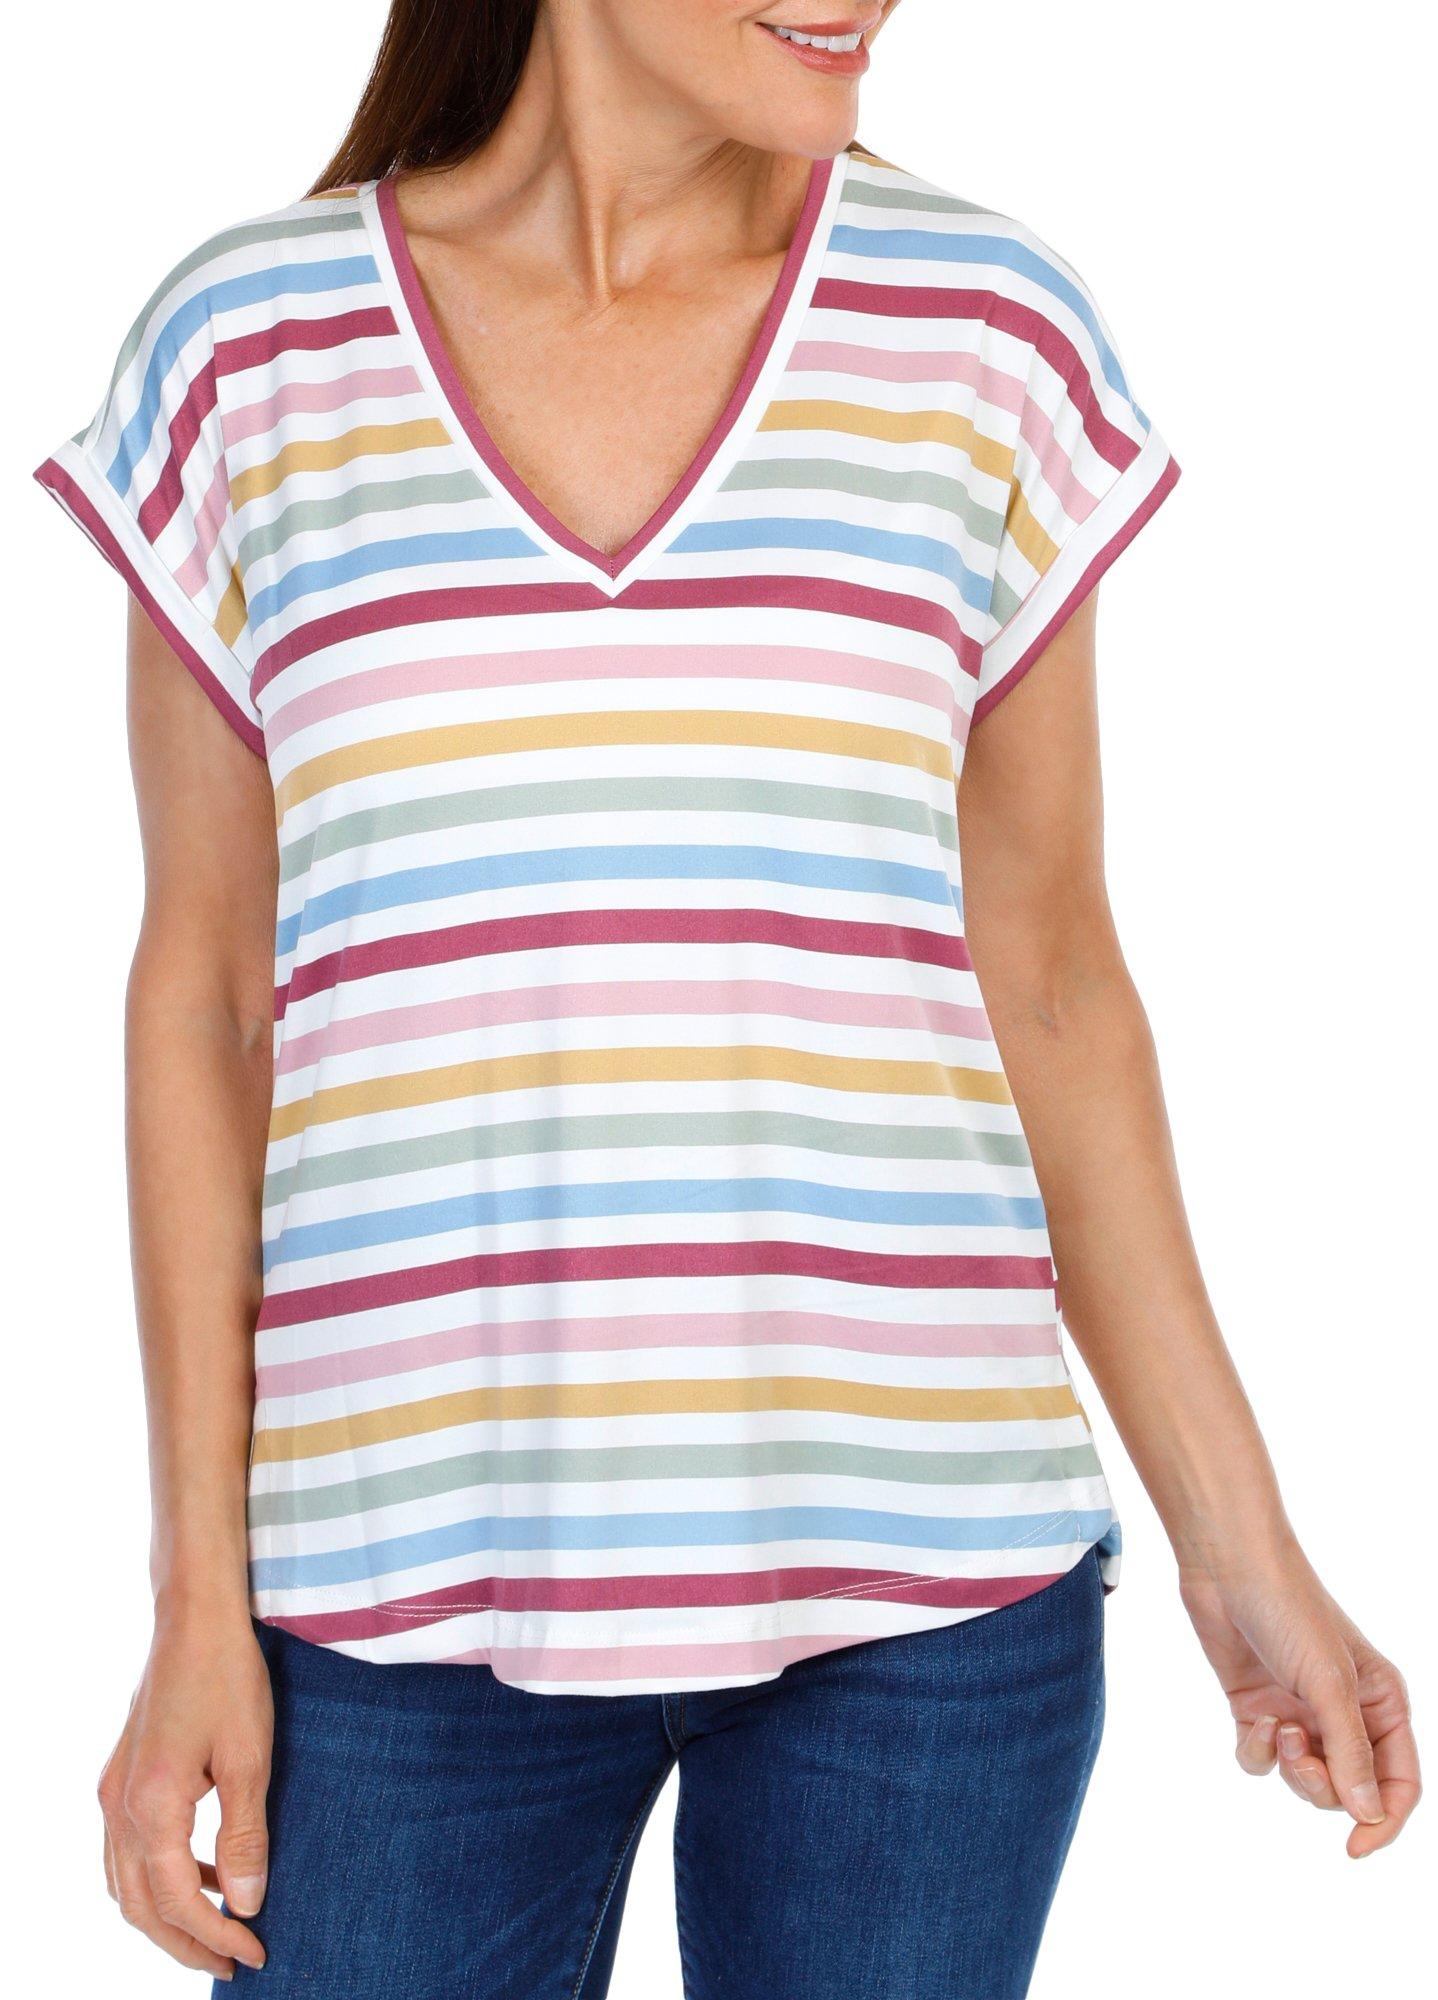 Women's Striped Short Sleeve Top